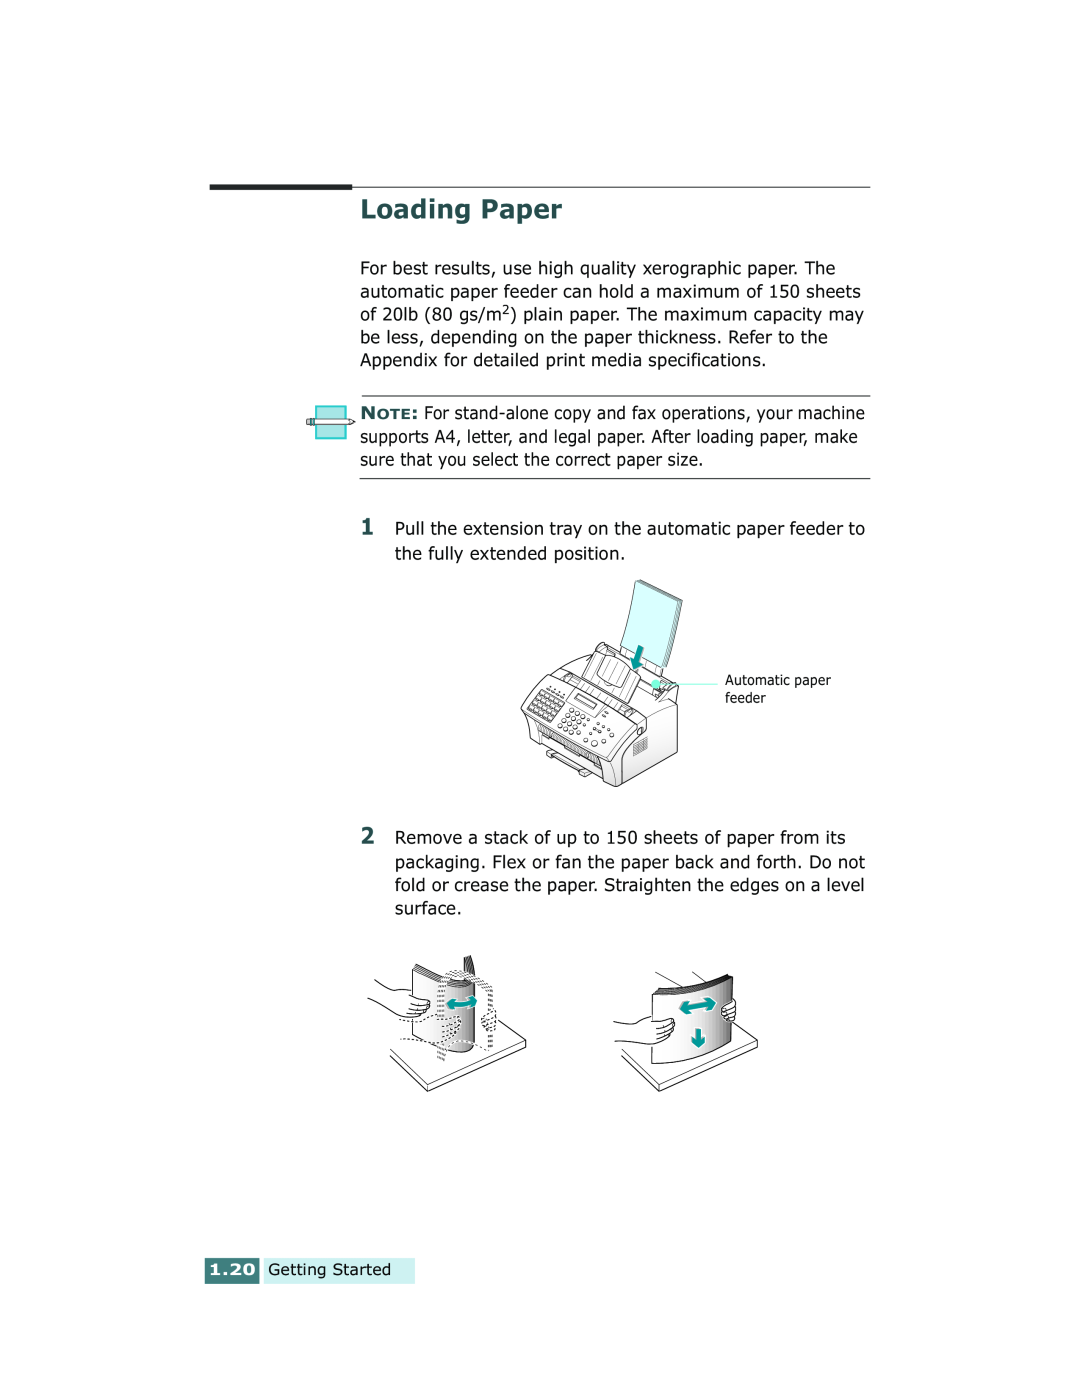 Xerox Pro 580 manual Loading Paper 